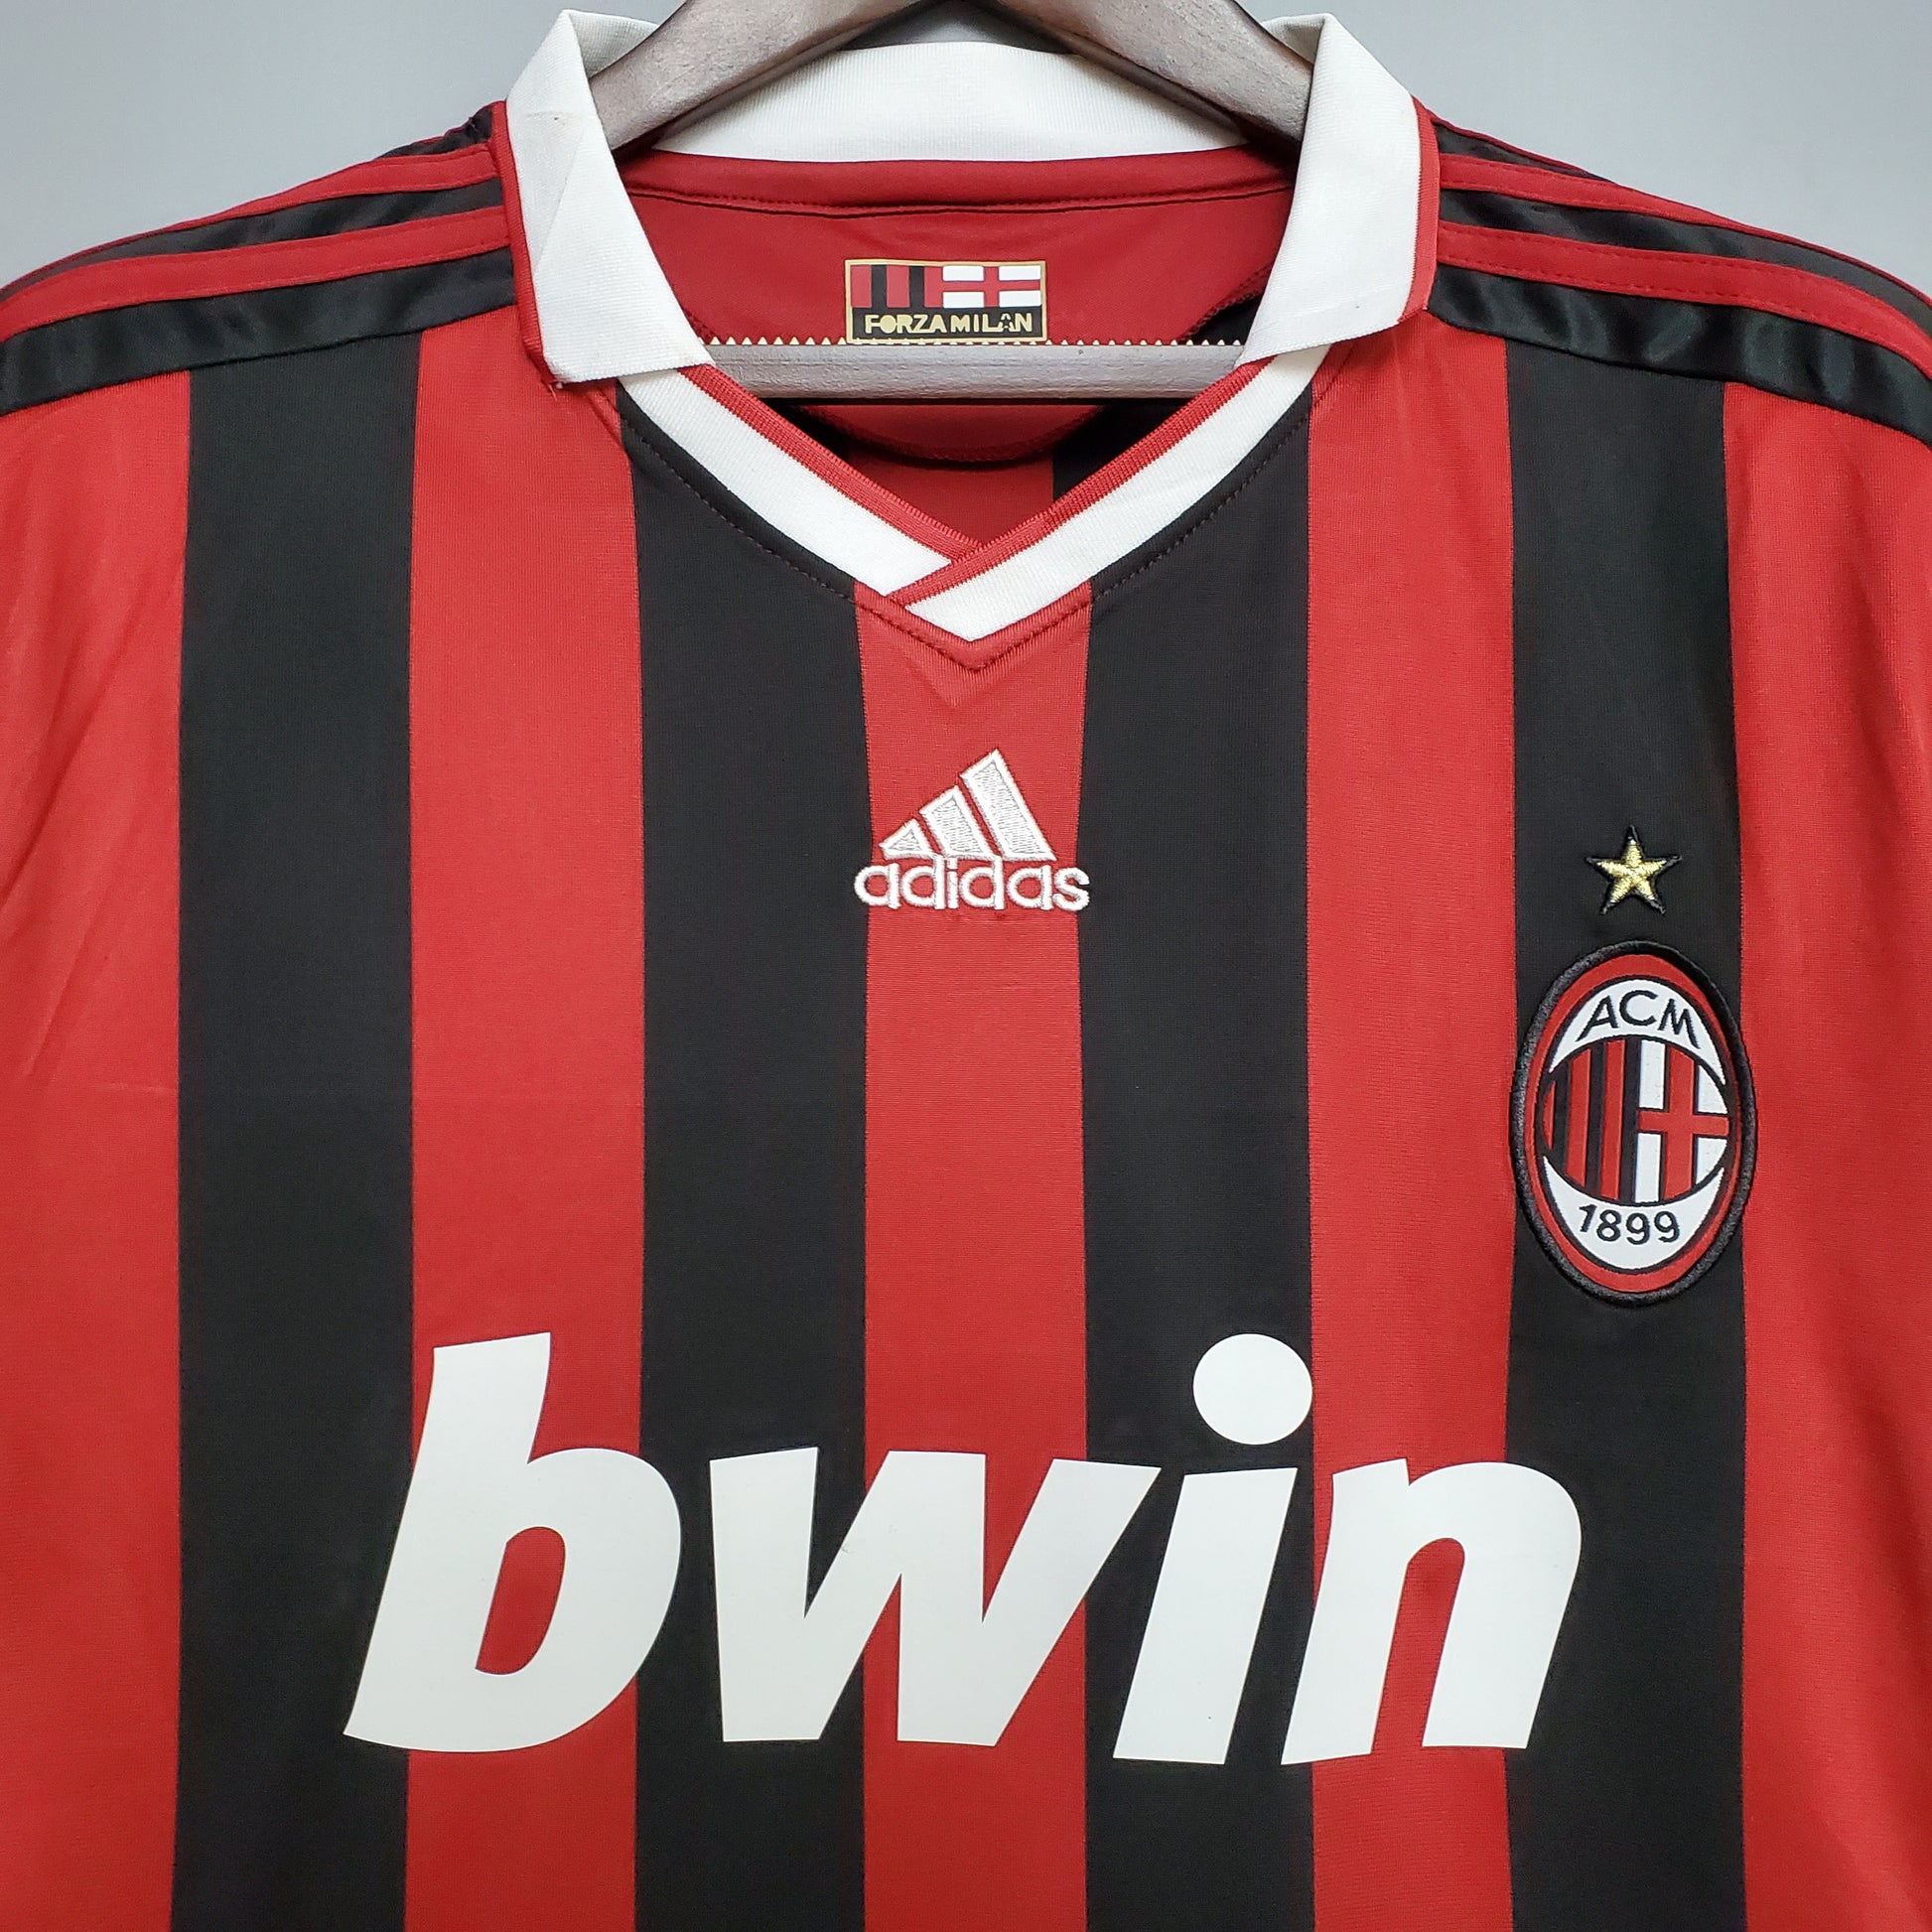 AC Milan 2009/10 Home Shirt – The Legends Range